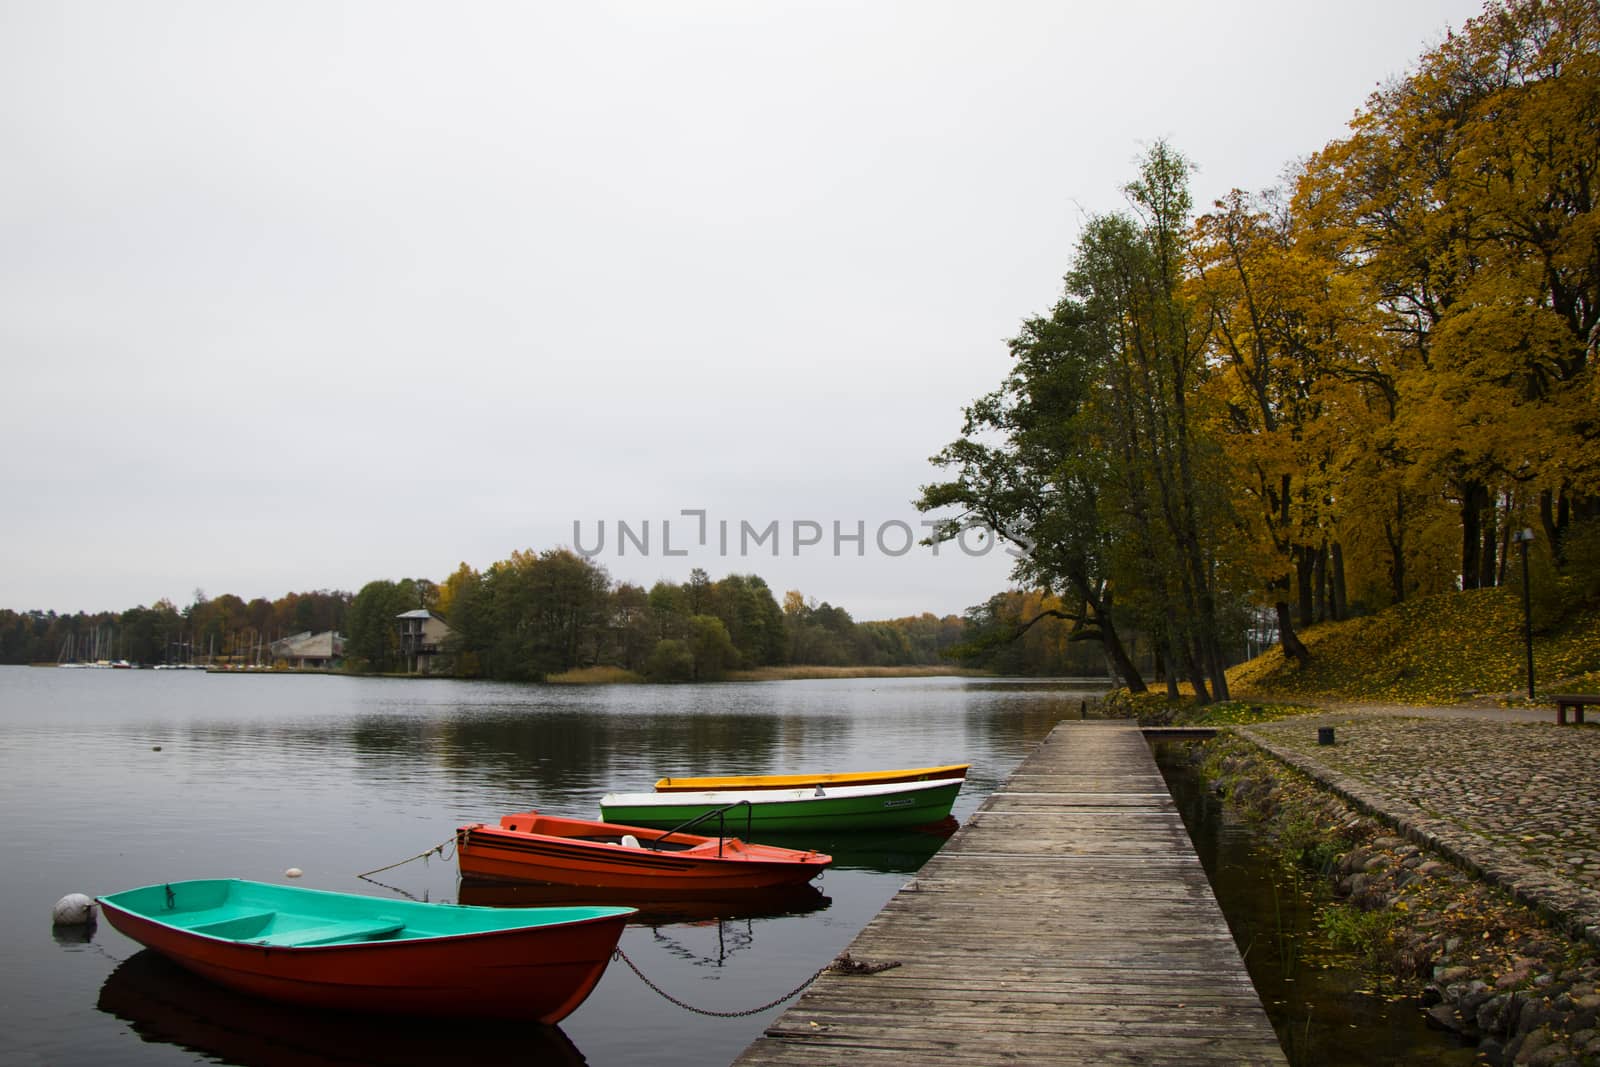 Old wooden boats near the beach of Trakai Gavle lake , Lithuania. Autumn and fall time.